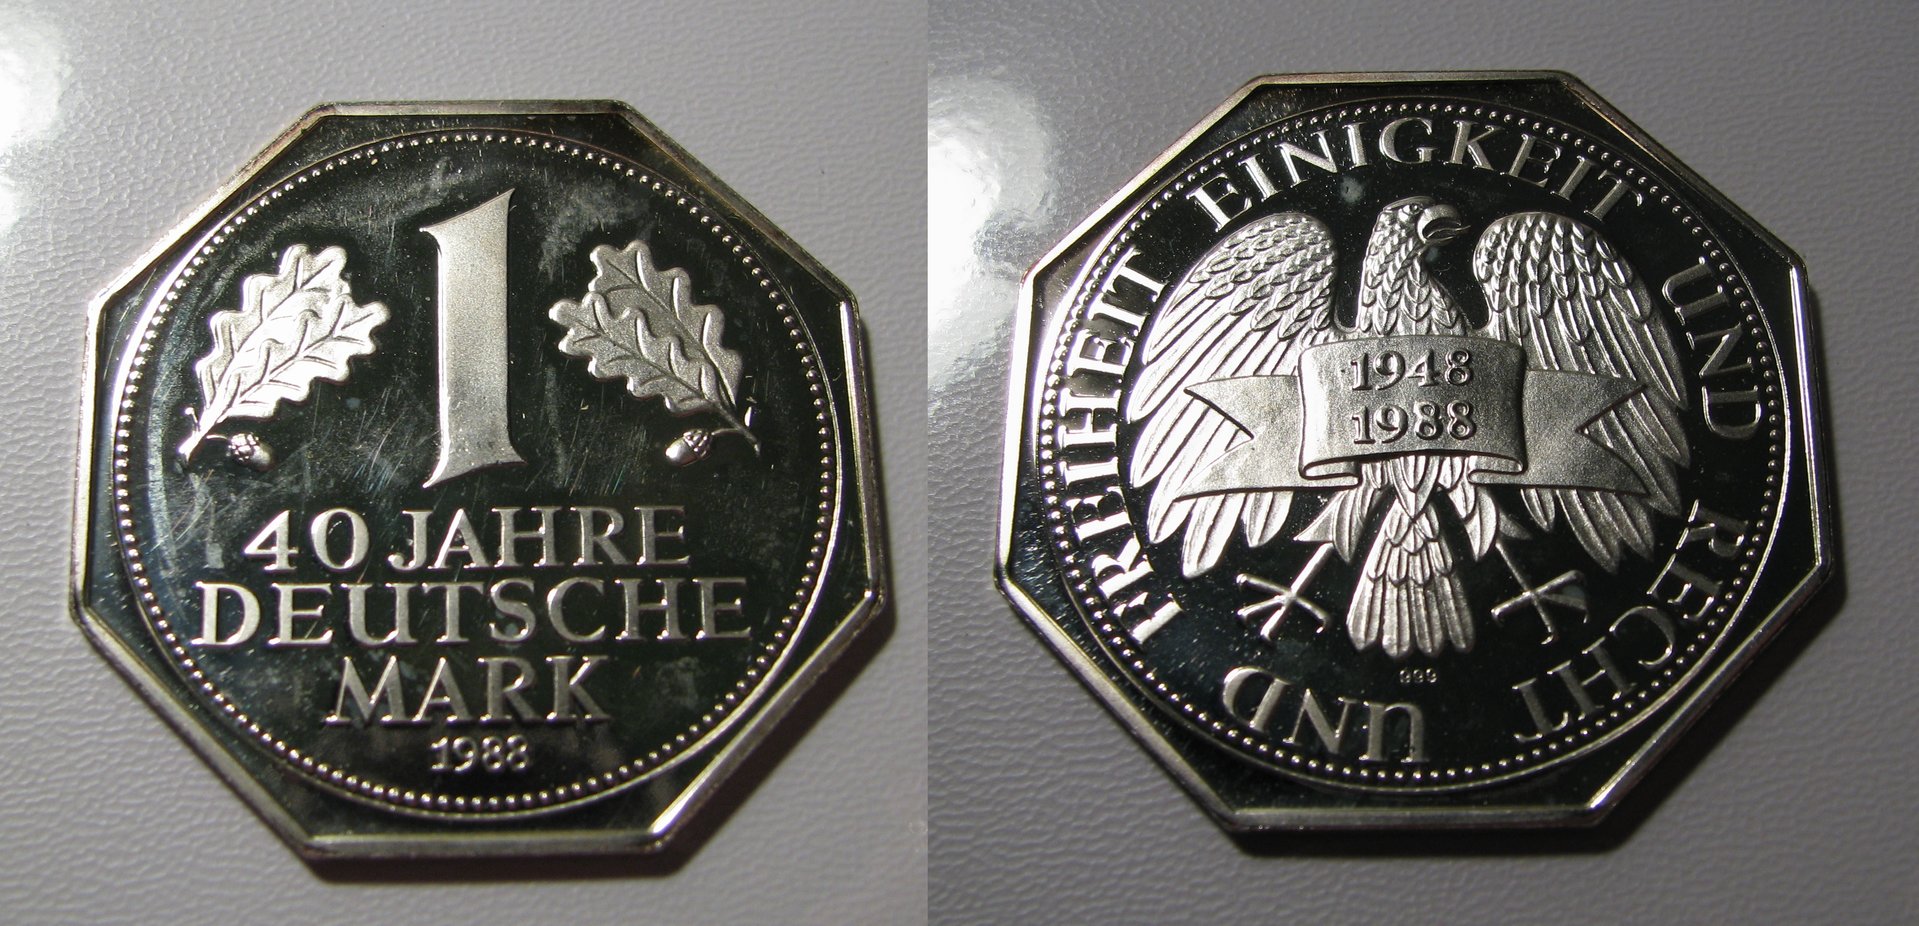 1988 Germany 40th Anniversary of Deutsche Mark.jpg